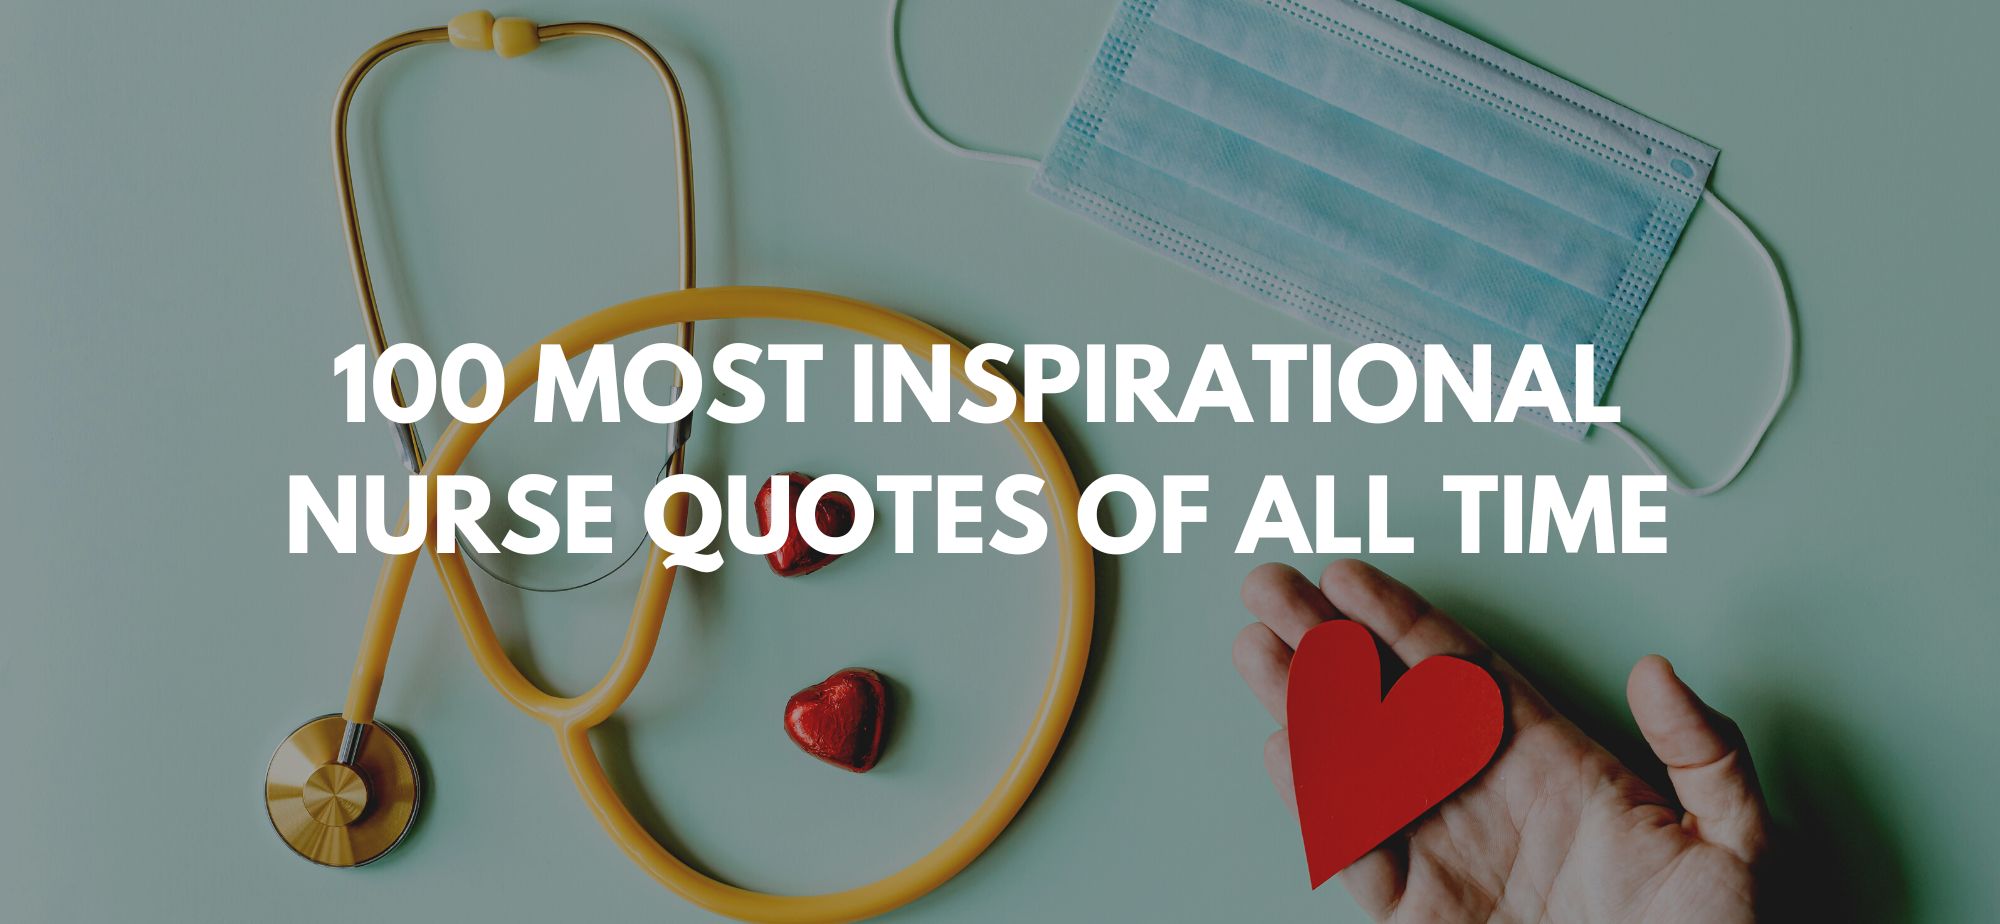 Nurse Quotes Blog Feature Image